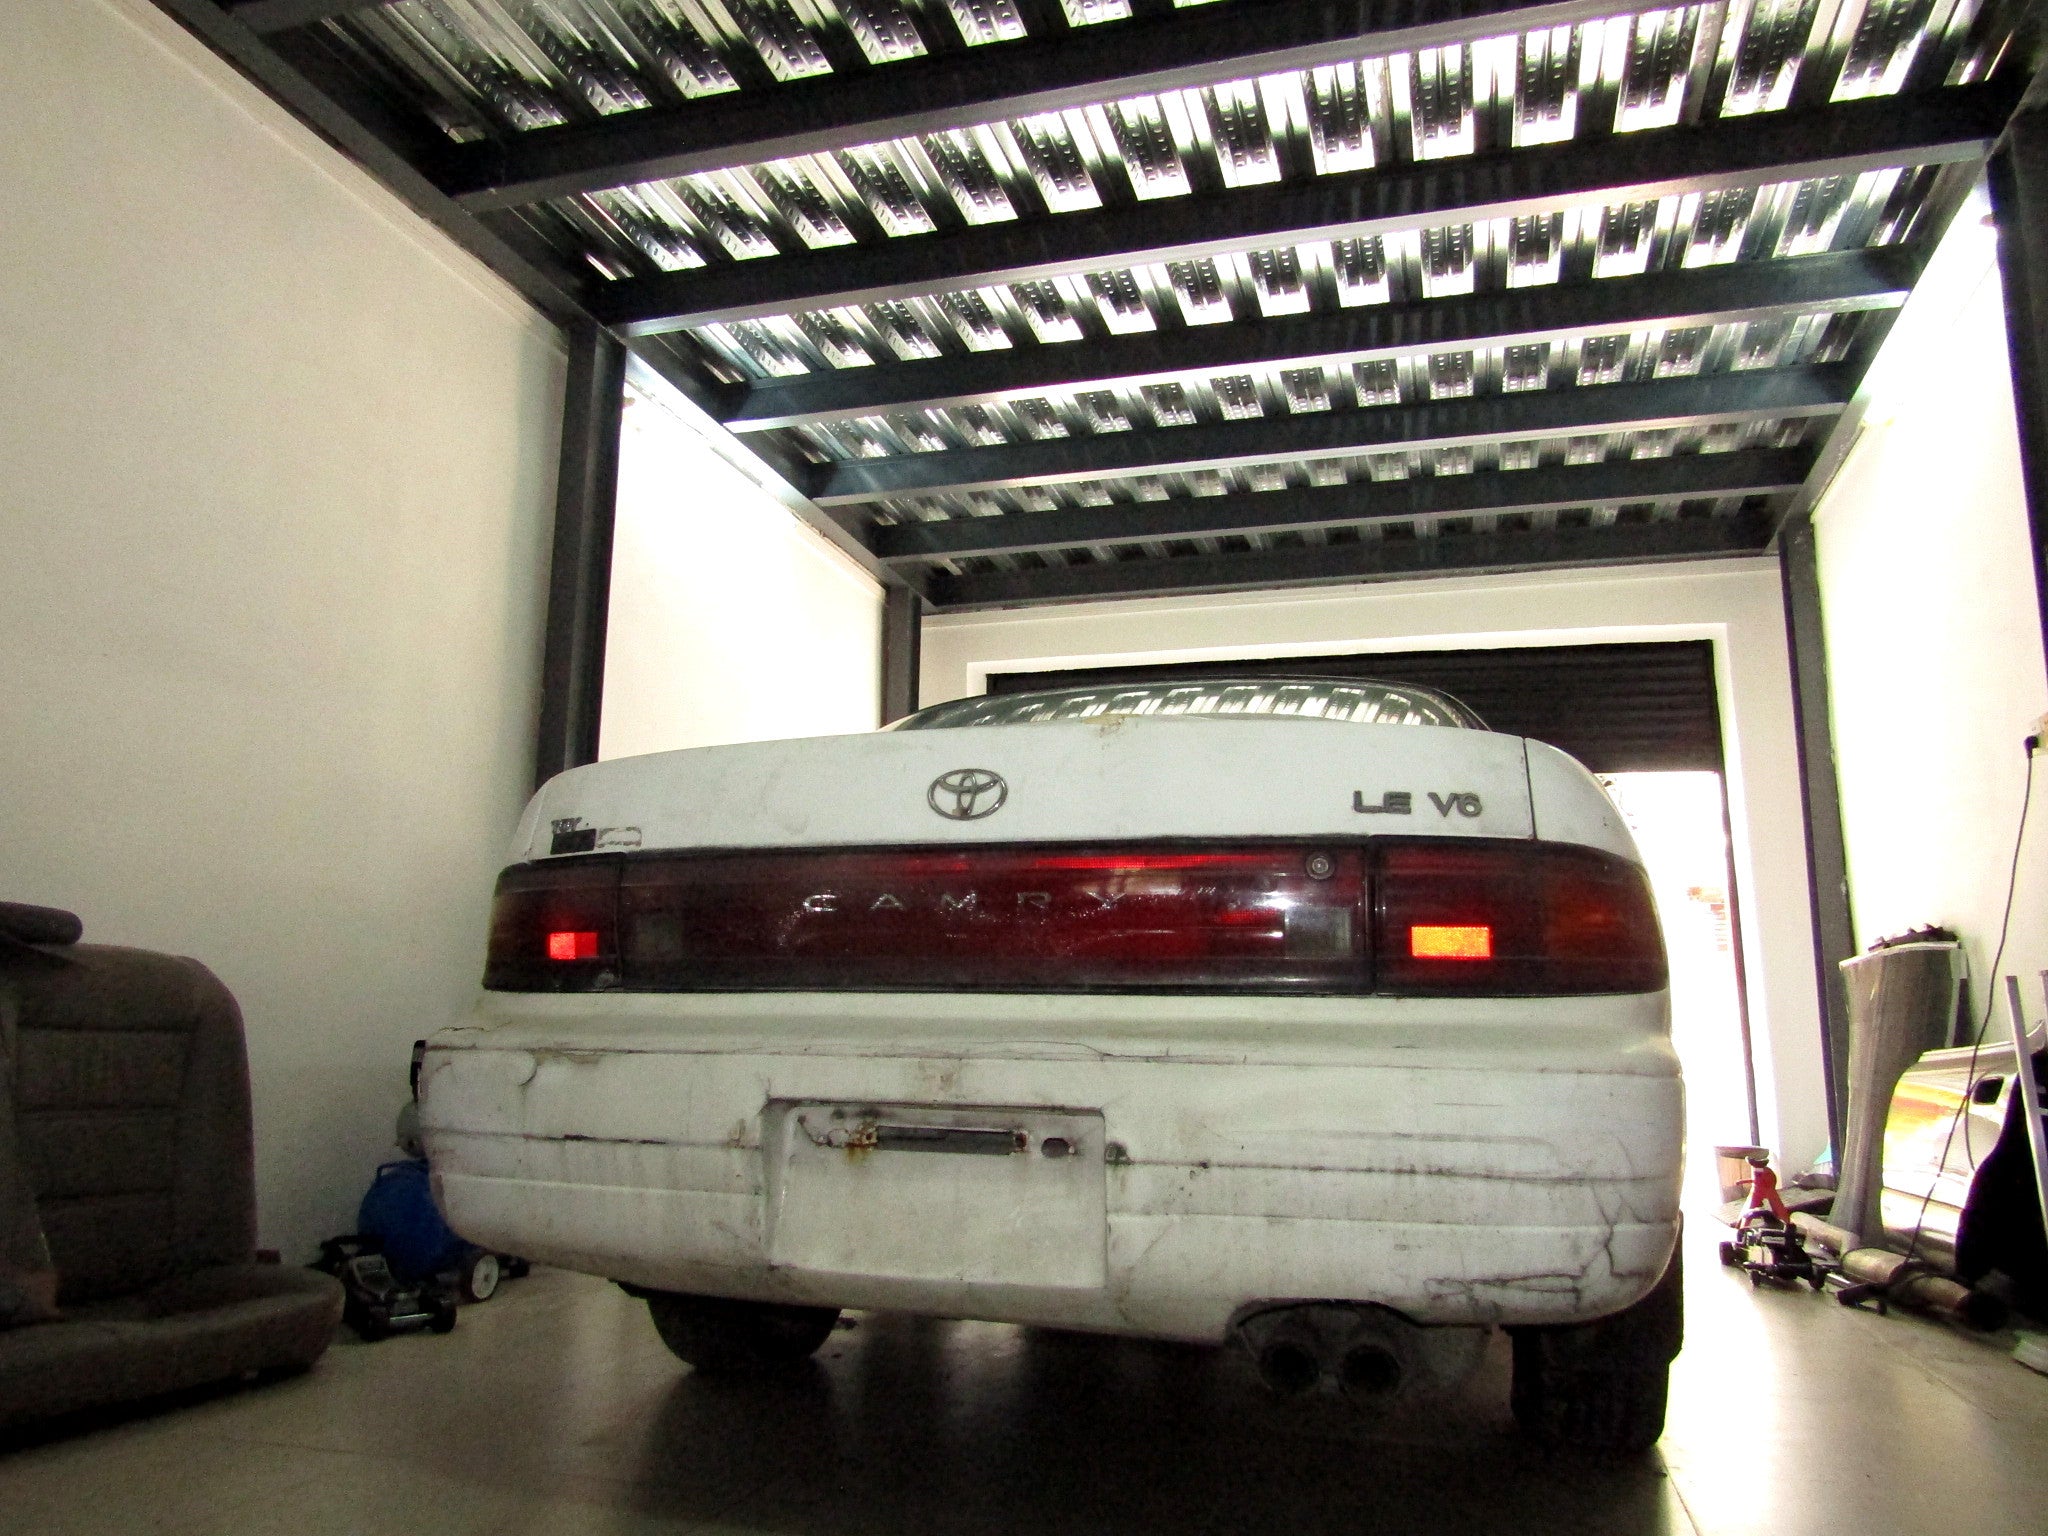 1992 Toyota Camry Project Gallery - Autopartone.com